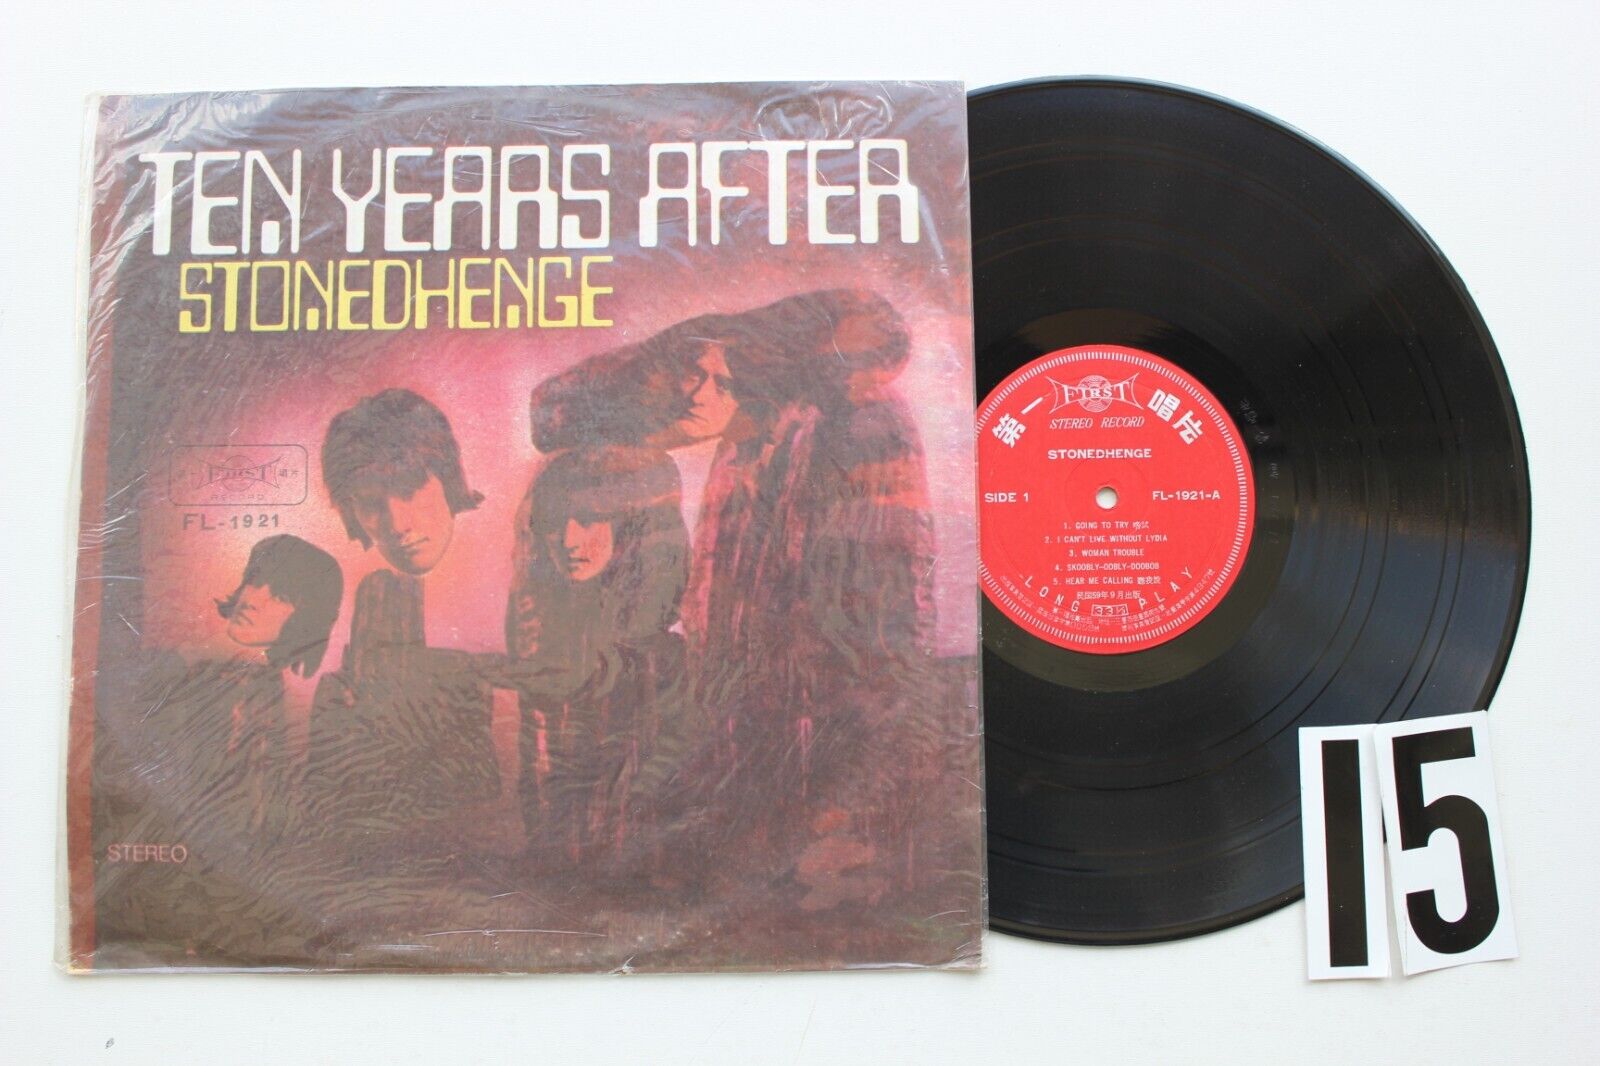 Ten Years After - Stonedhenge Record lp original vinyl album - Taiwan Import